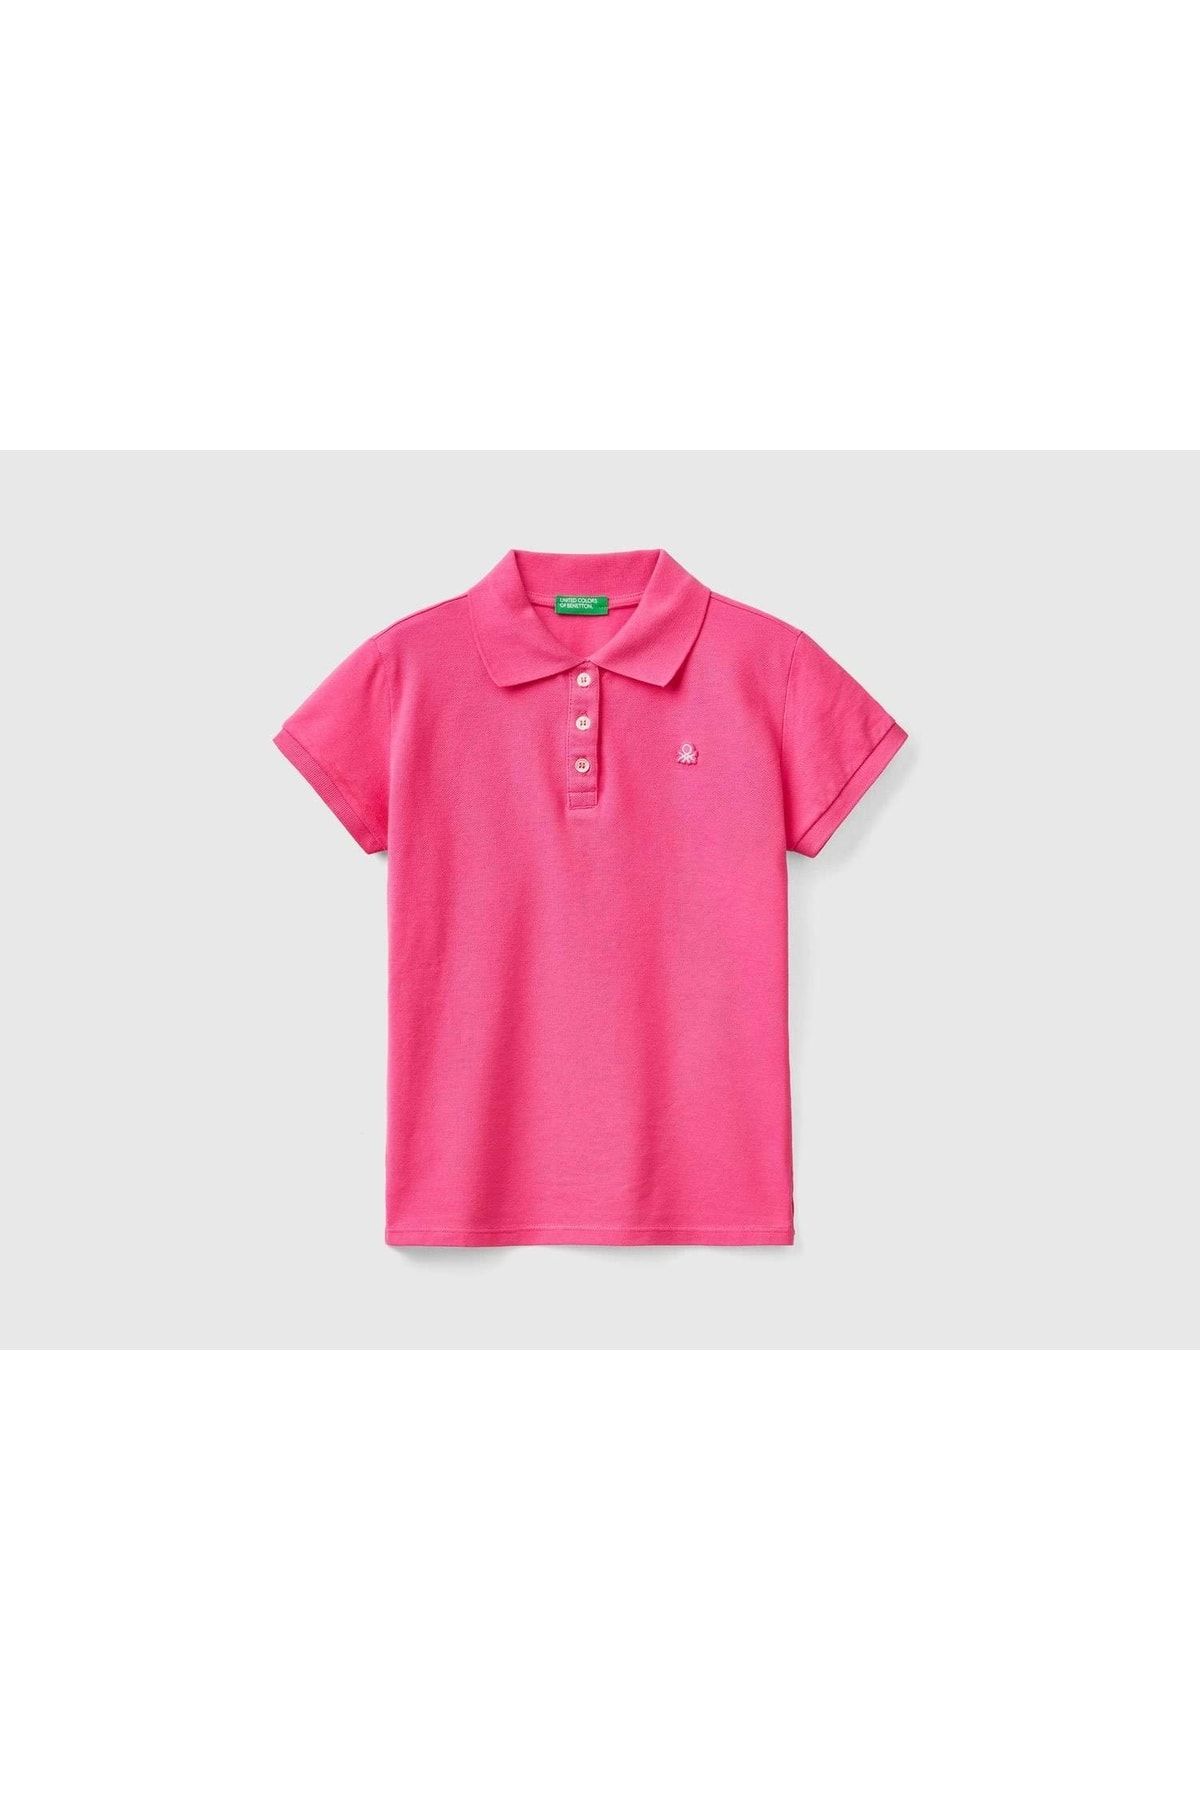 United Colors of Benetton Kız Çocuk Fuşya Logolu Pike Polo T-shirt